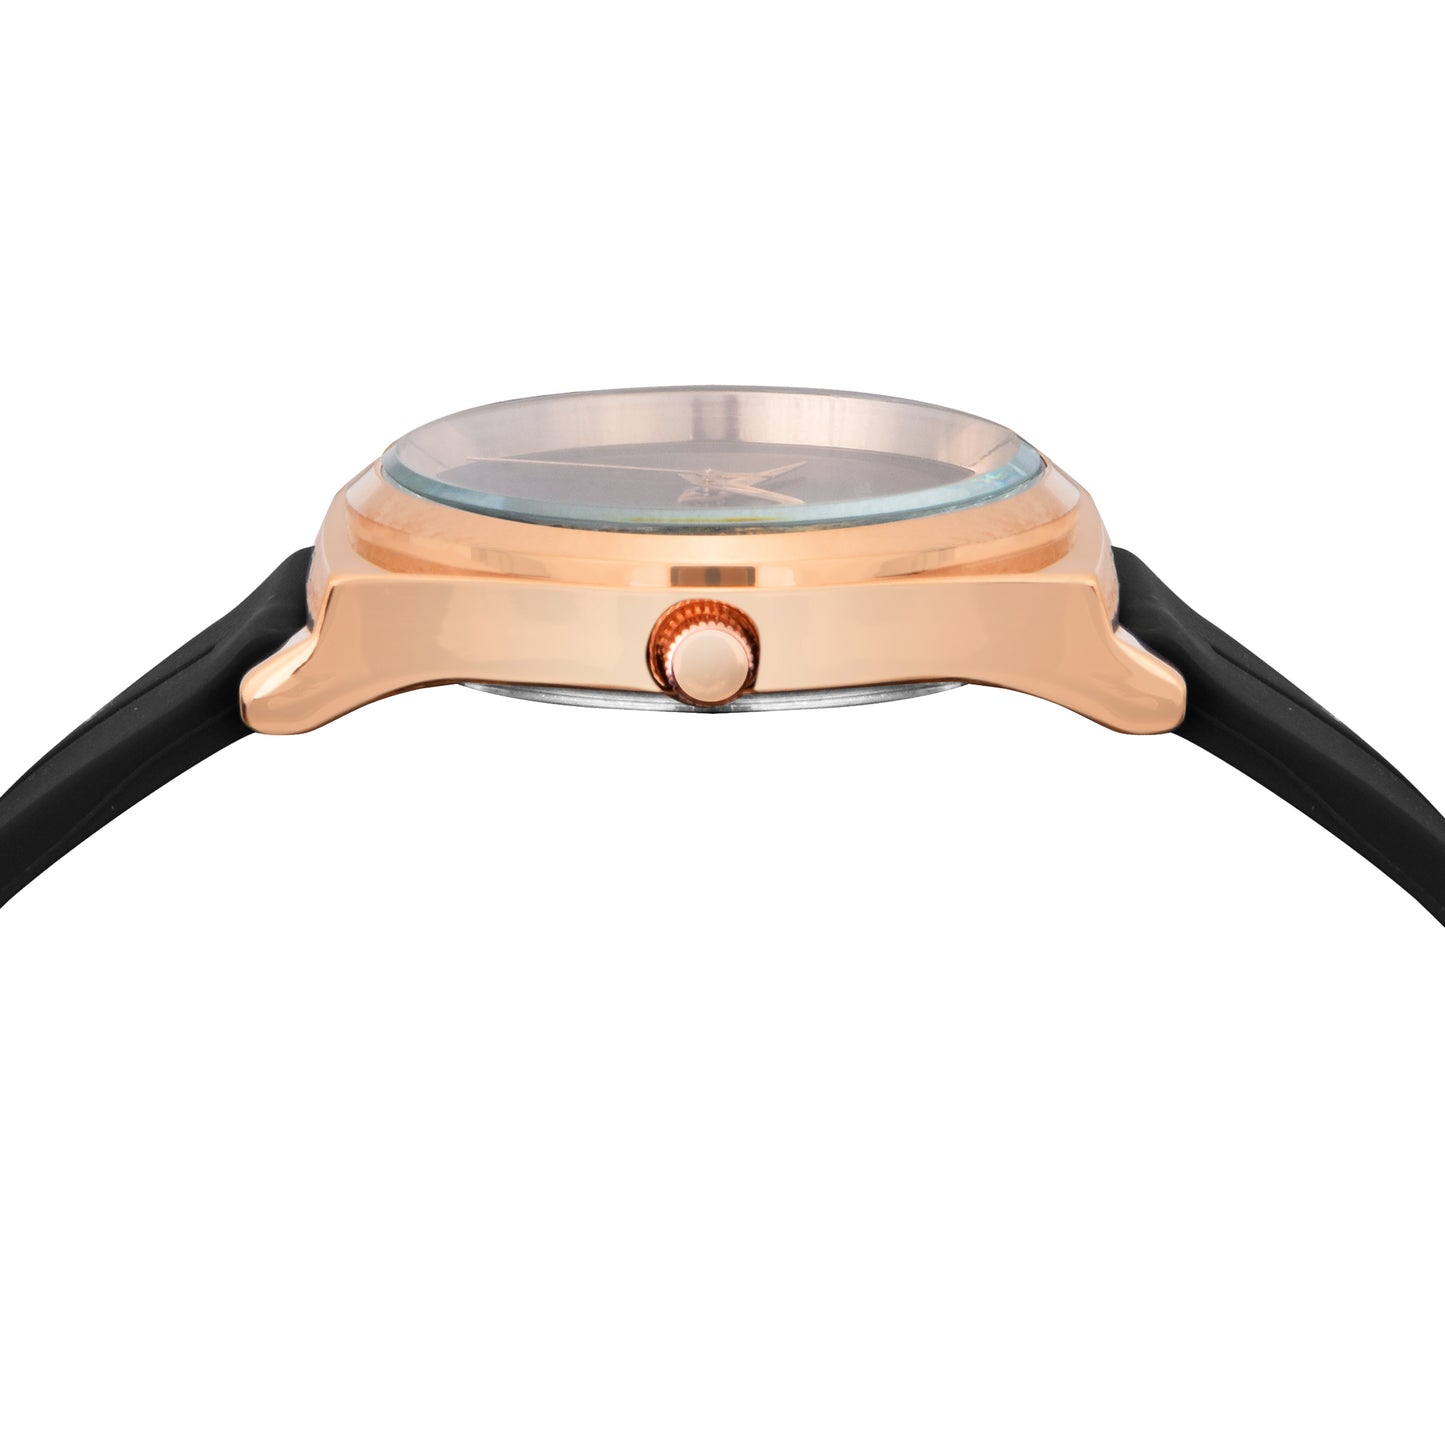 NEW ERA -Black -Sporty Elegance Unveiling Silicon Watch For Women F-120 RRL